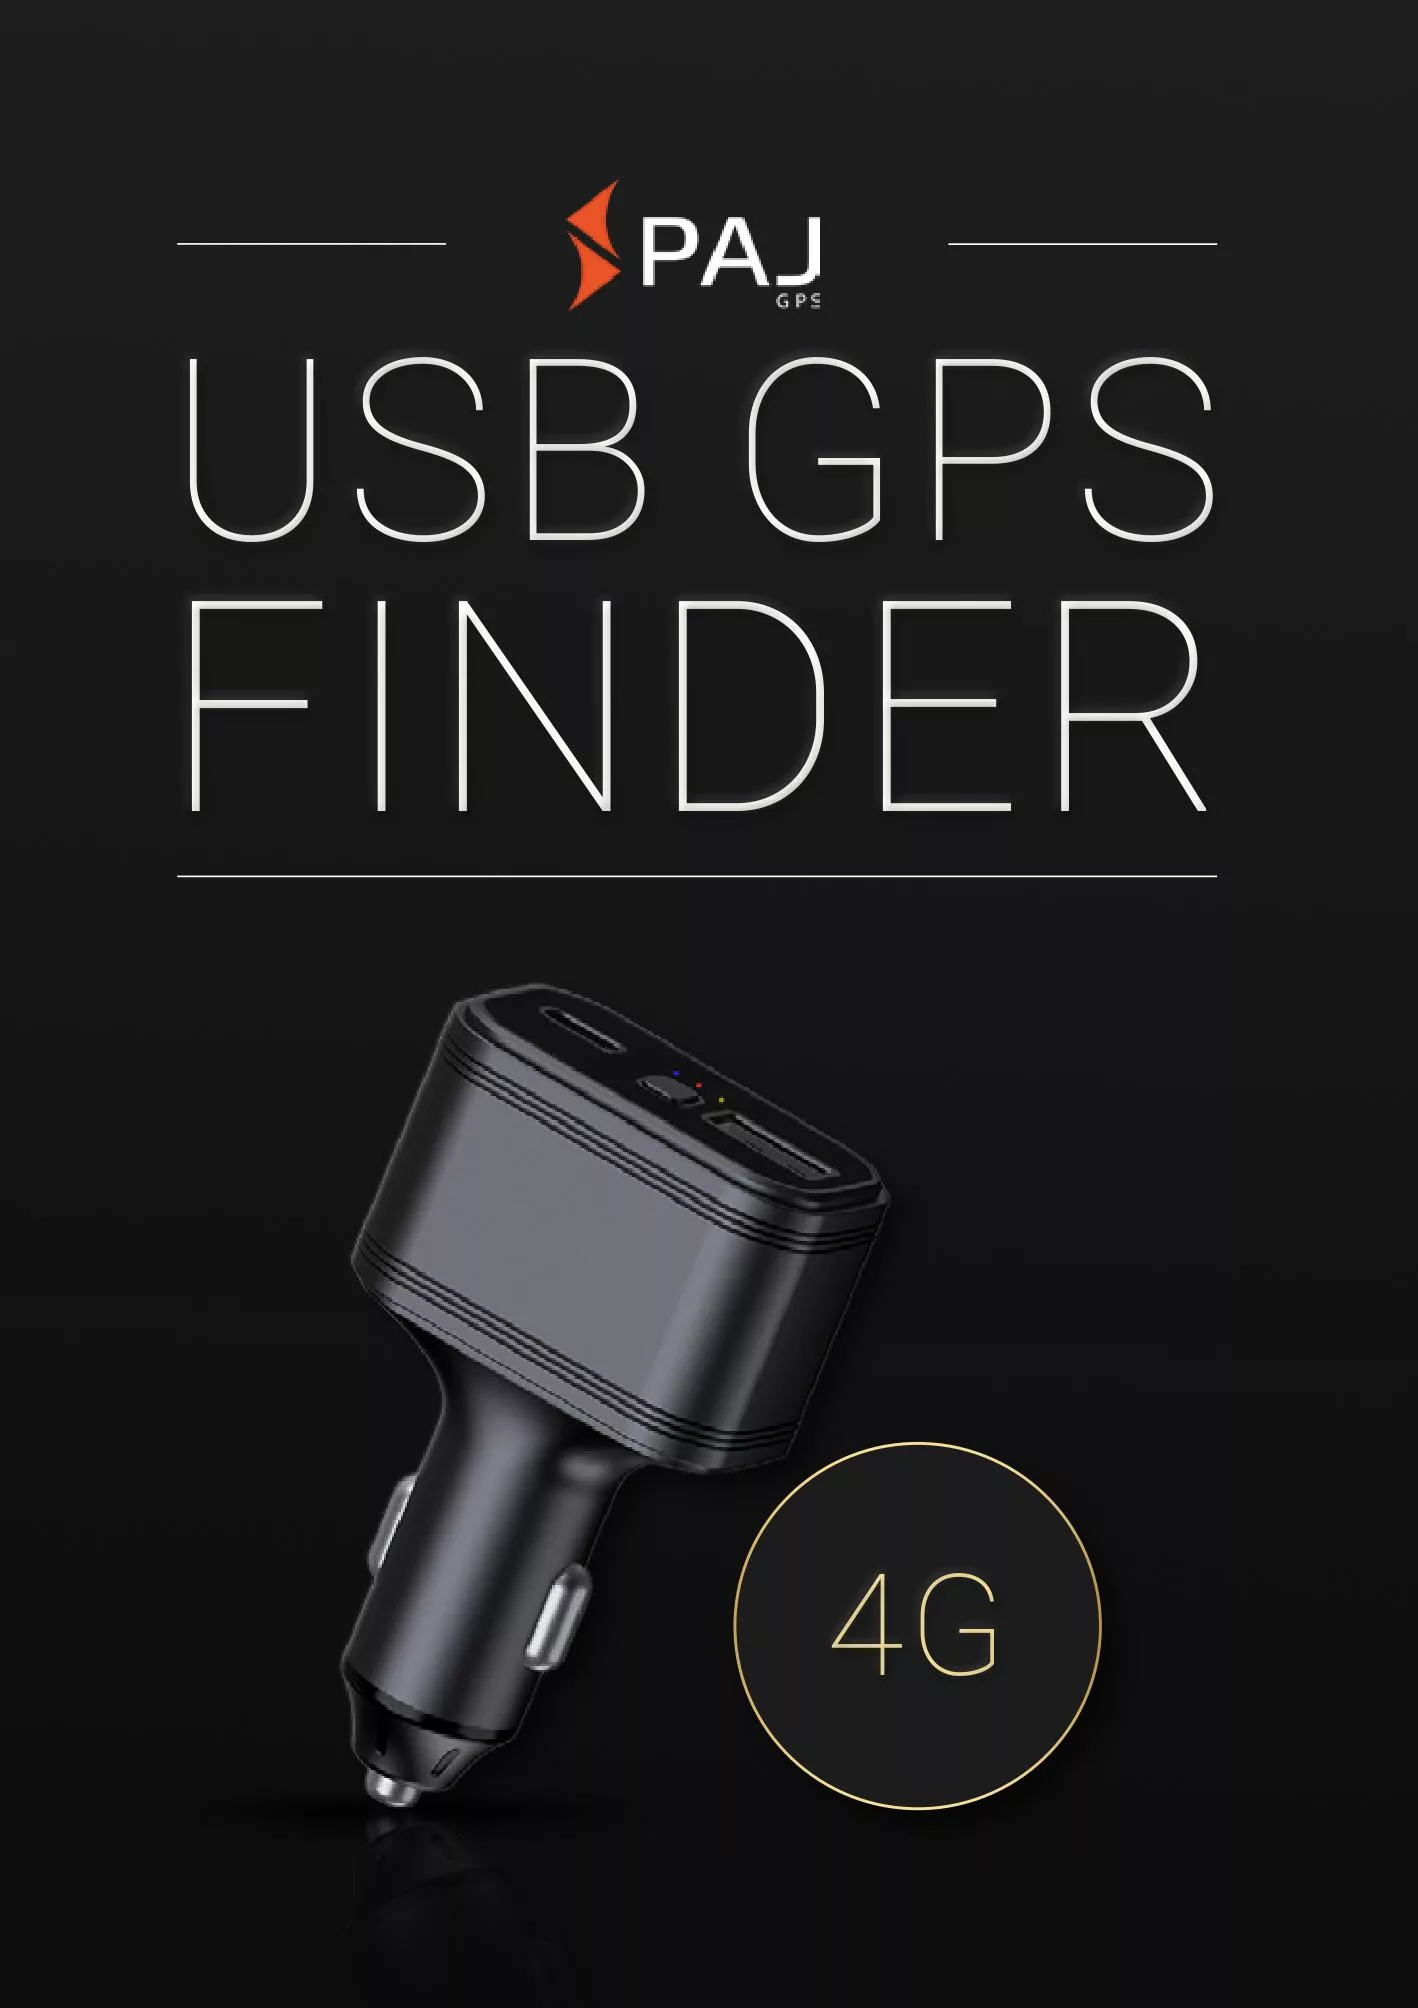 Imagem da capa para manual de instrucoes USB GPS Finder 4G